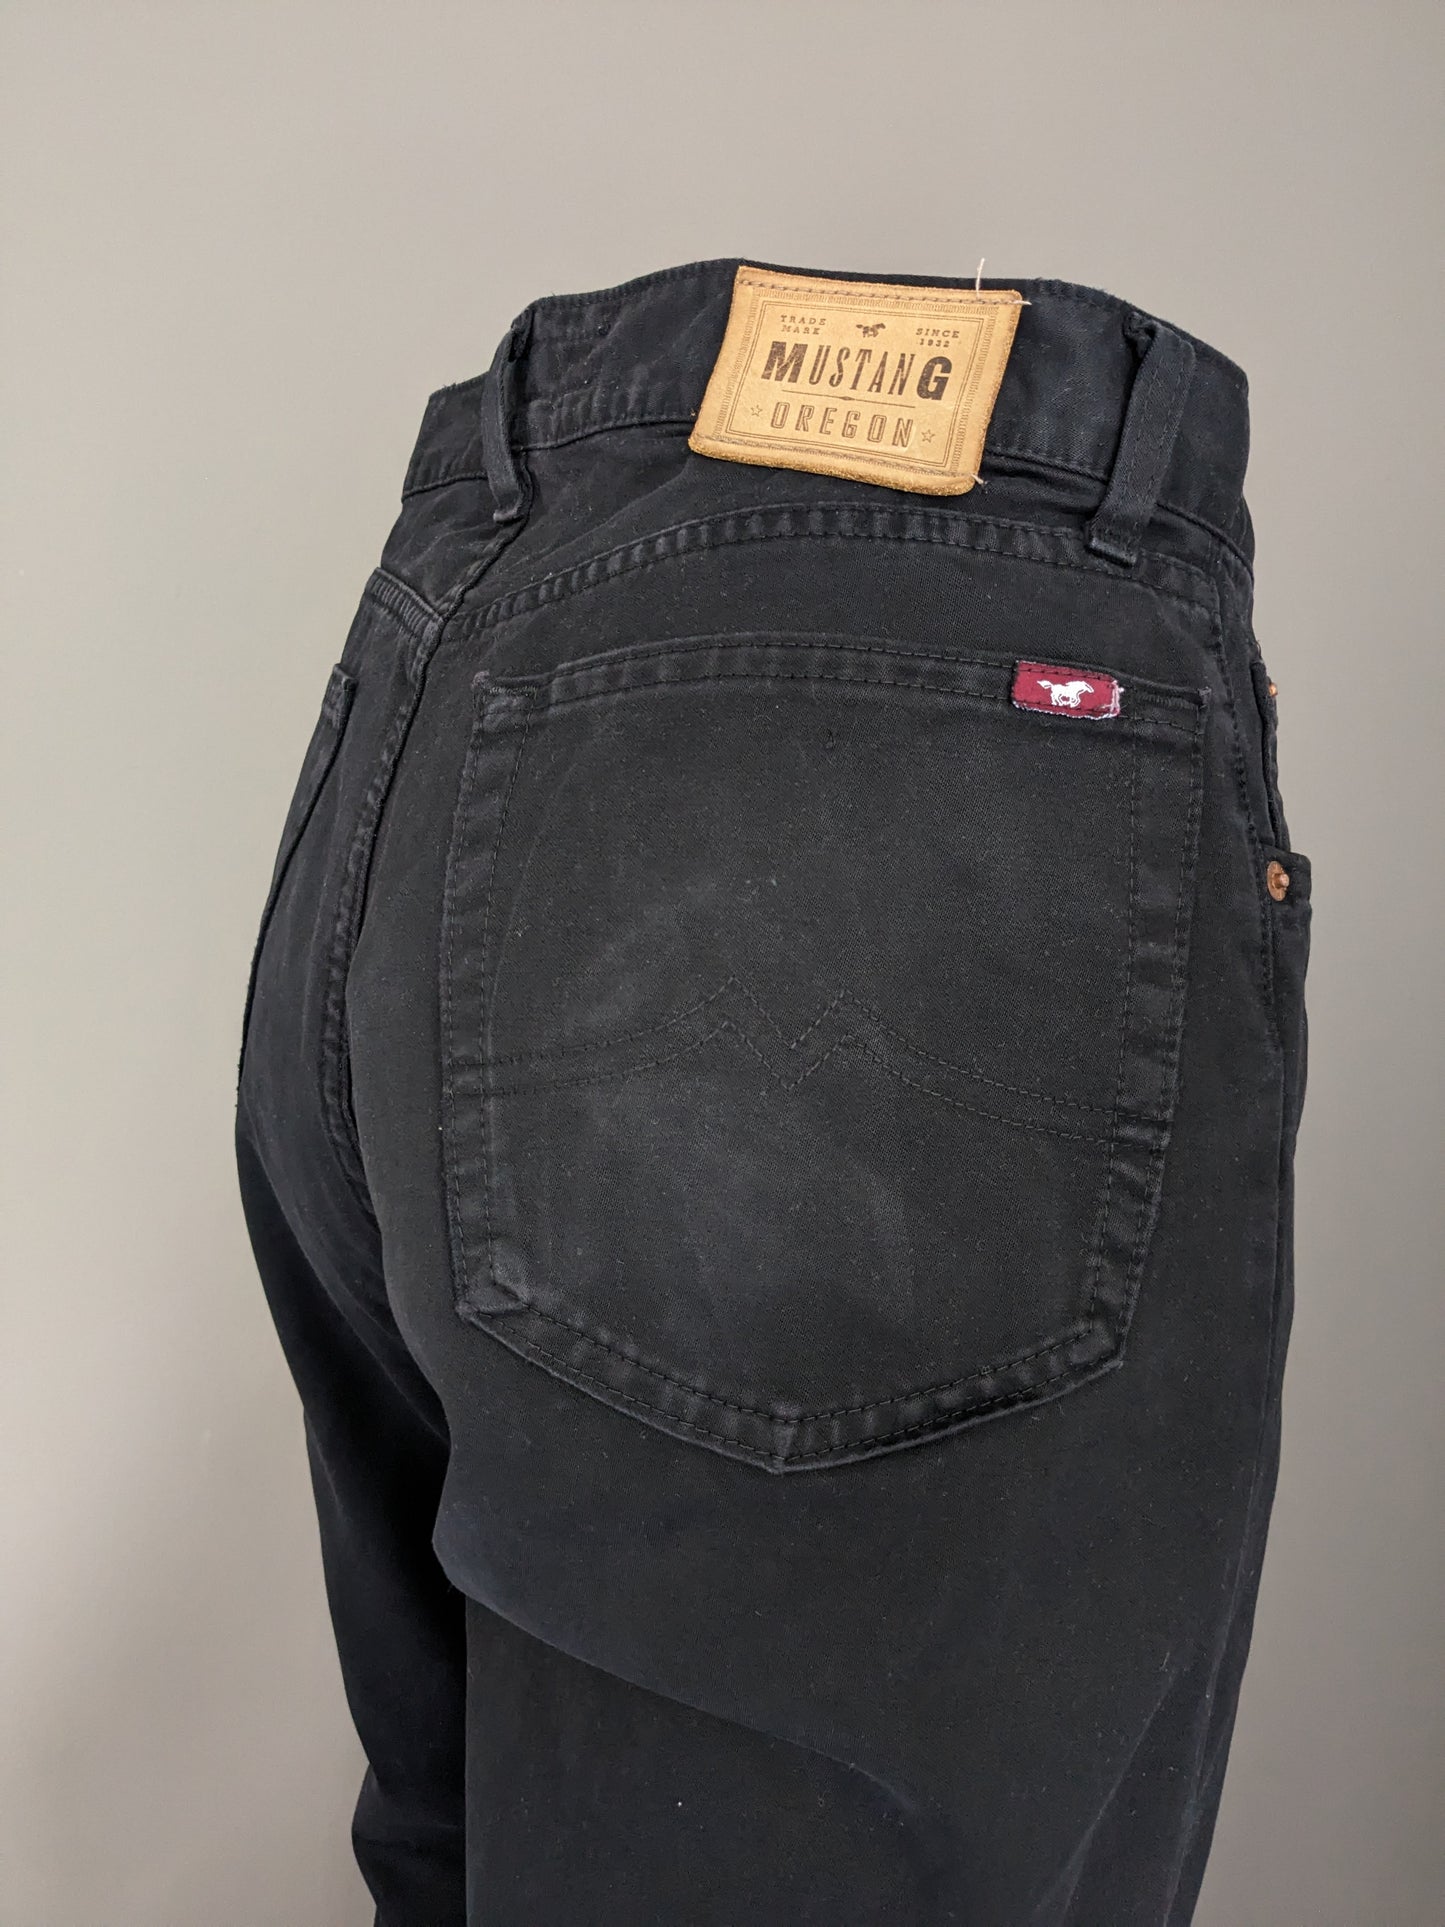 Mustang * Oregon * Jeans. Color negro. Tamaño W35 - L36.